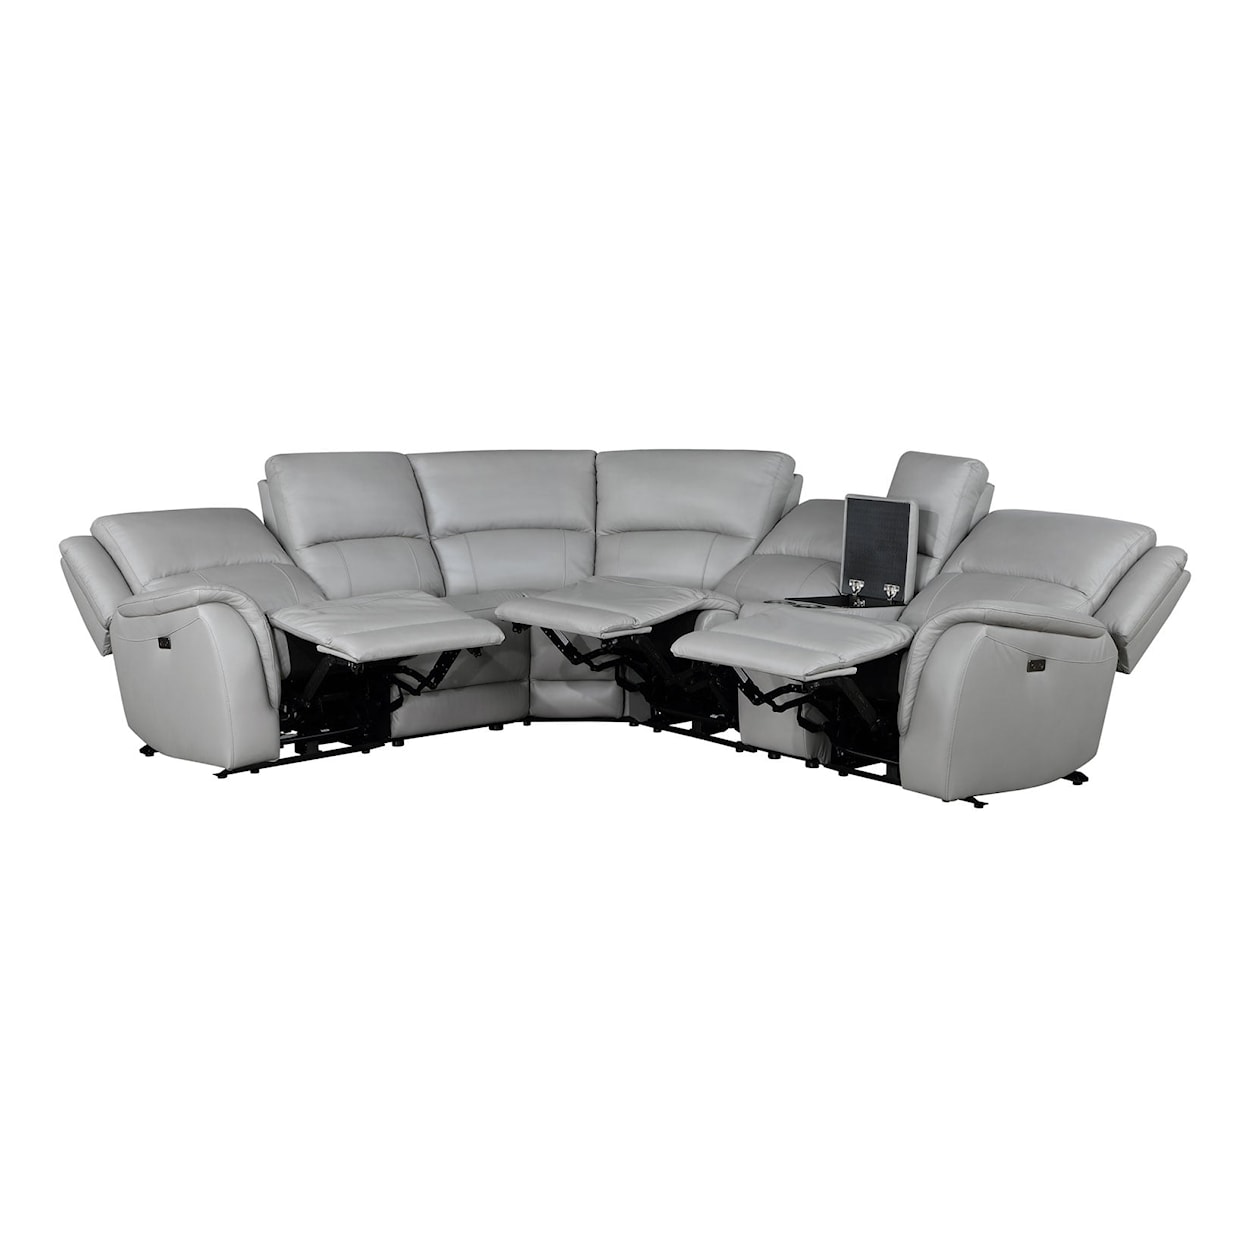 Prime Alexandria Sectional Sofa